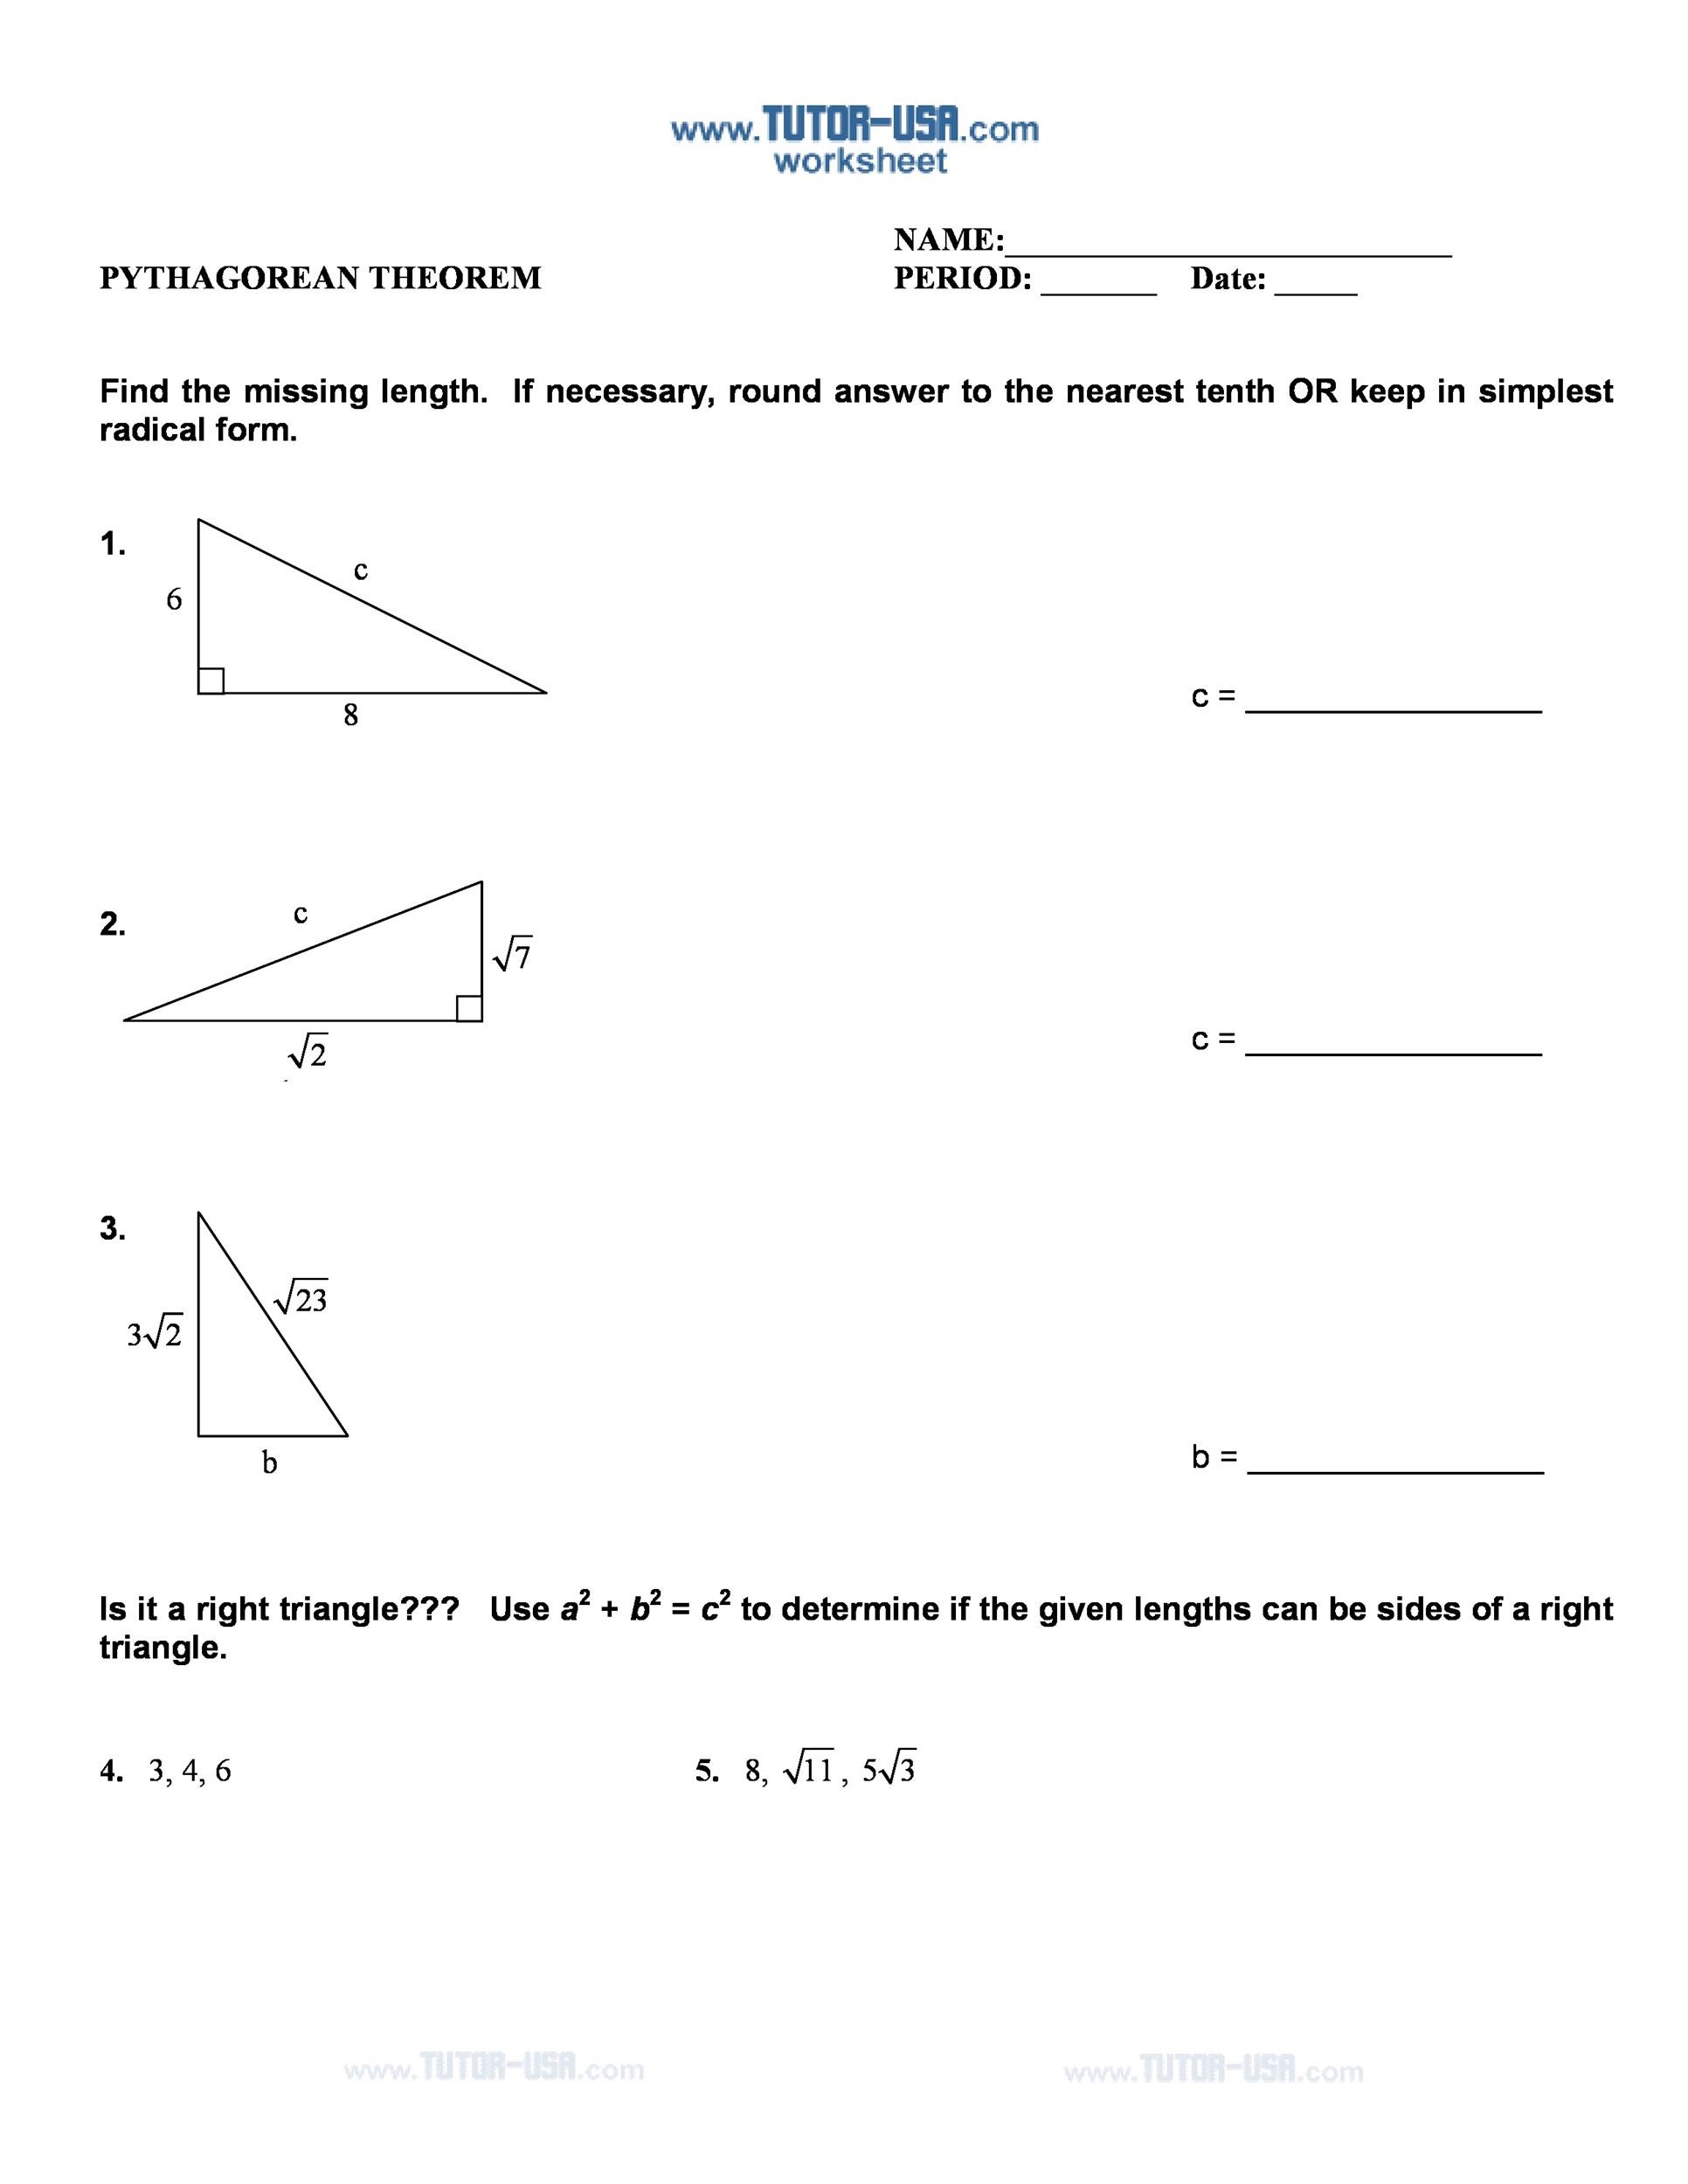 pythagoras-theorem-worksheet-pdf